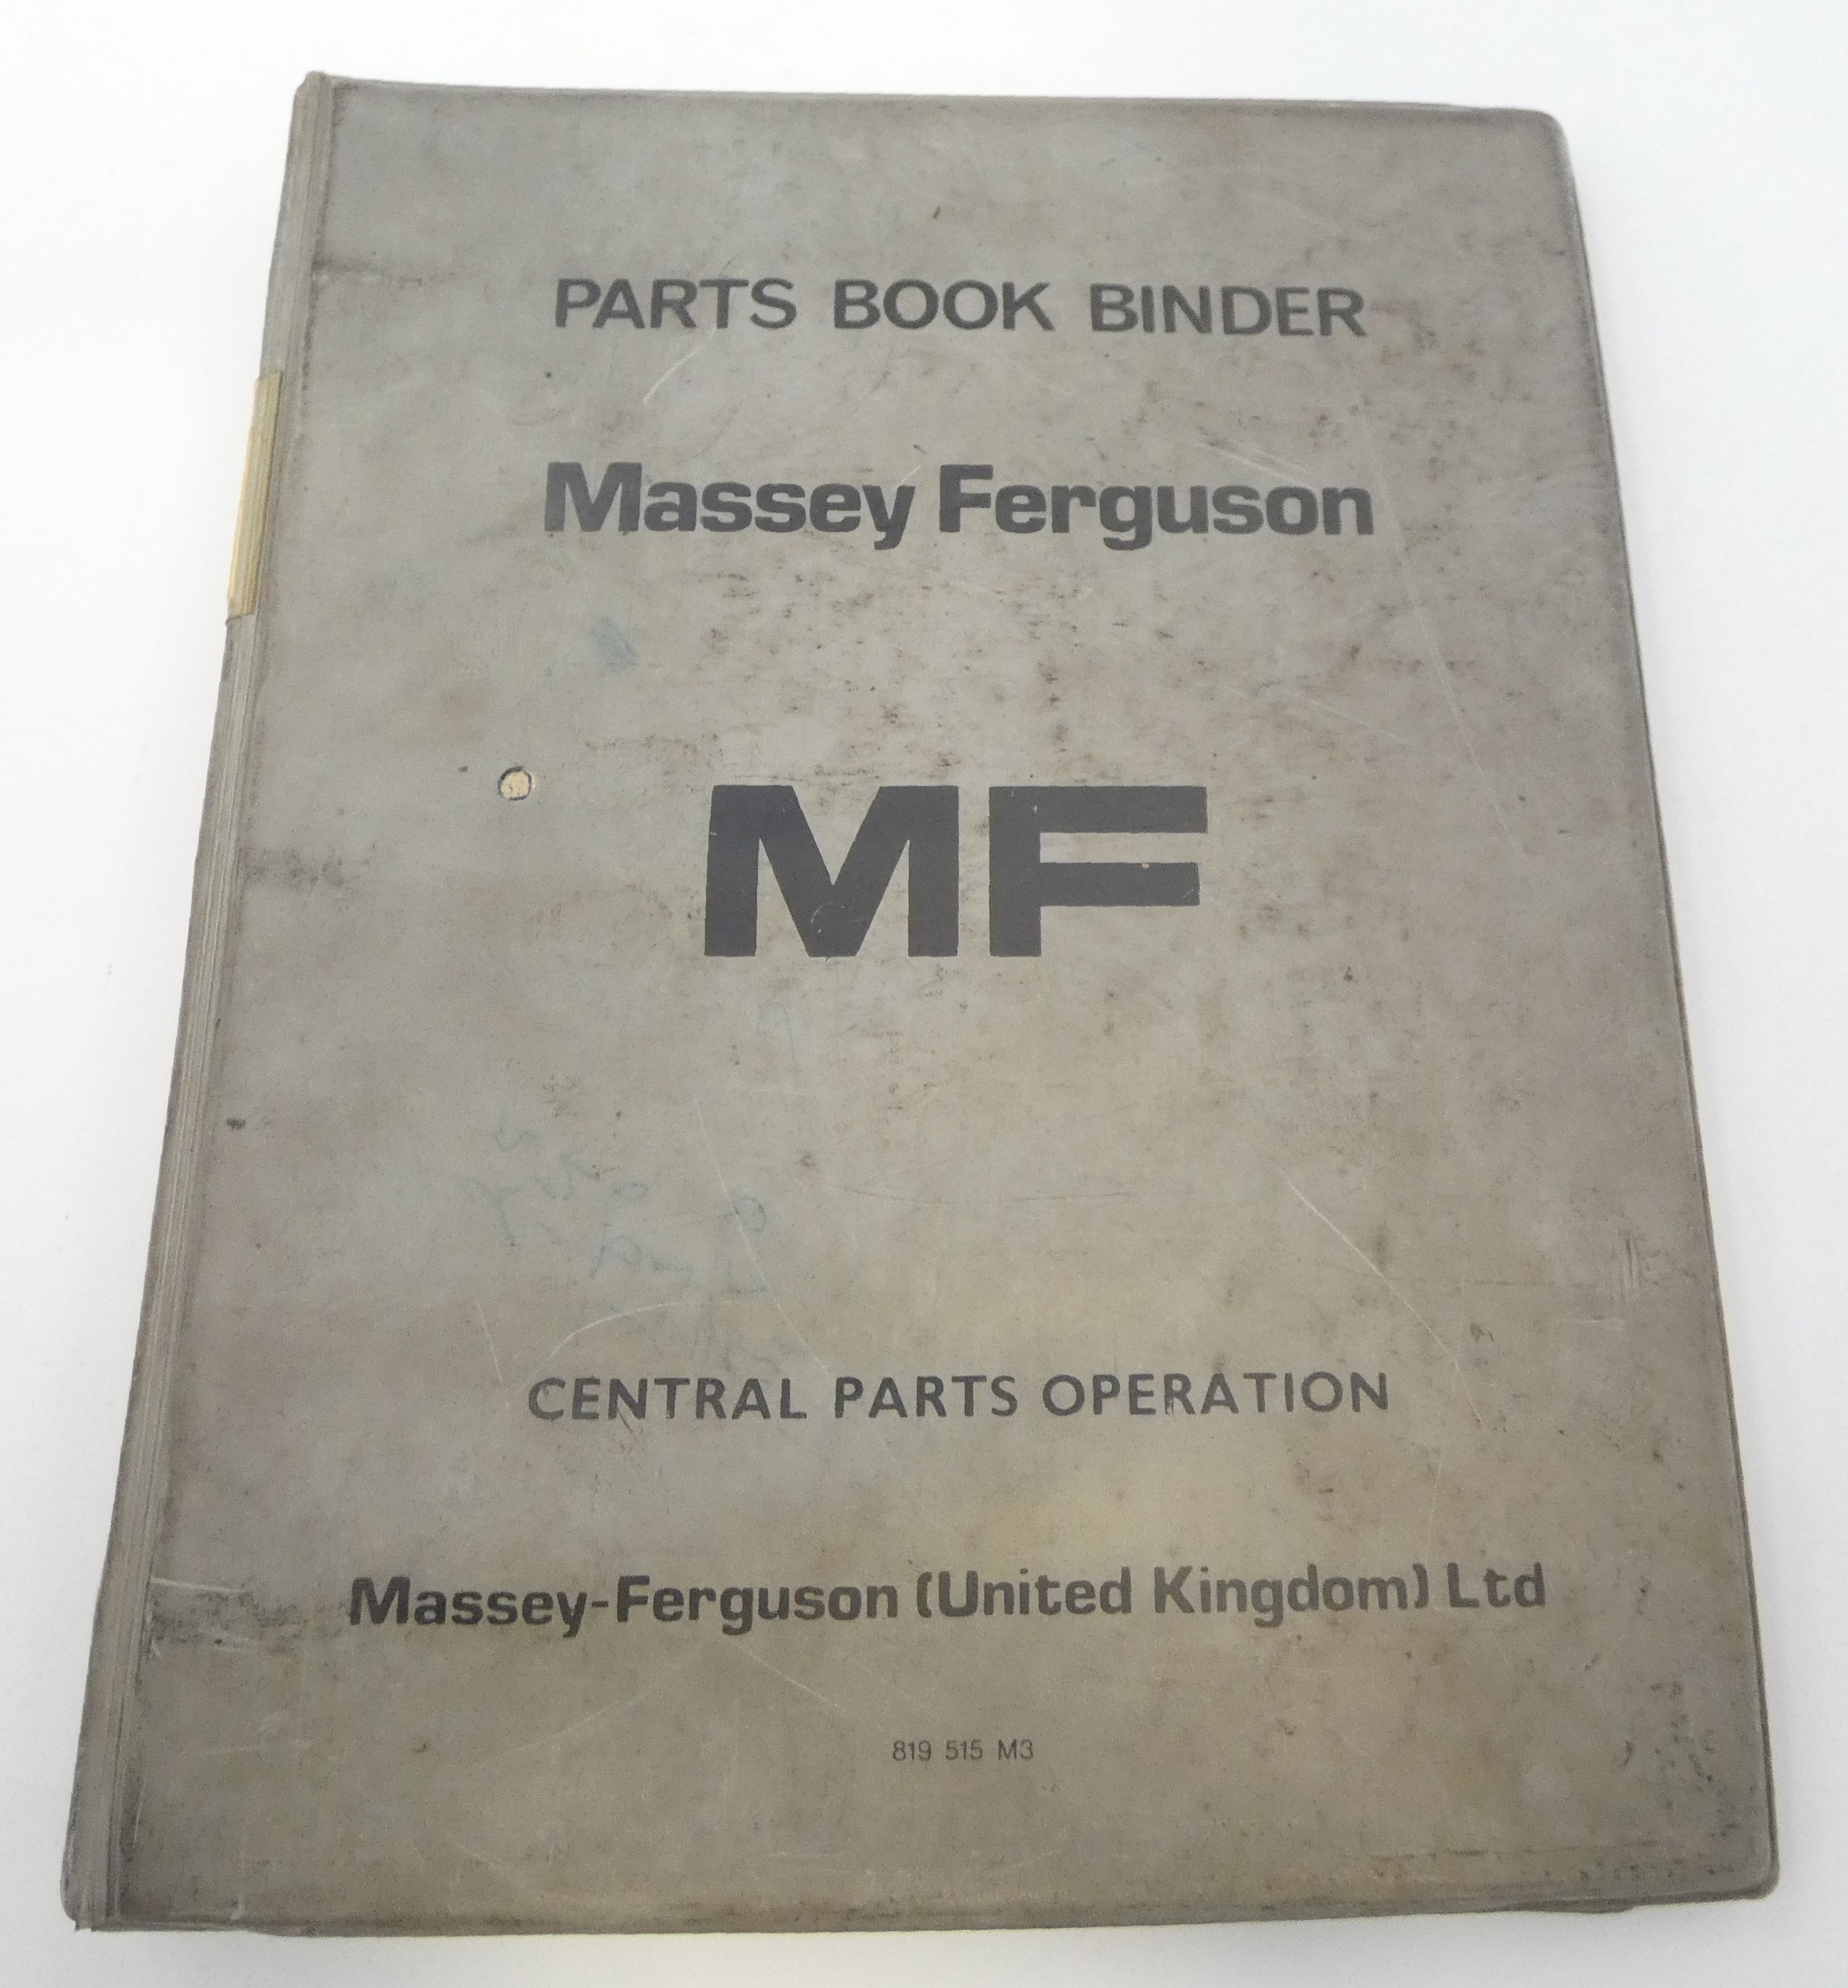 Massey-Ferguson 20 parts book binder